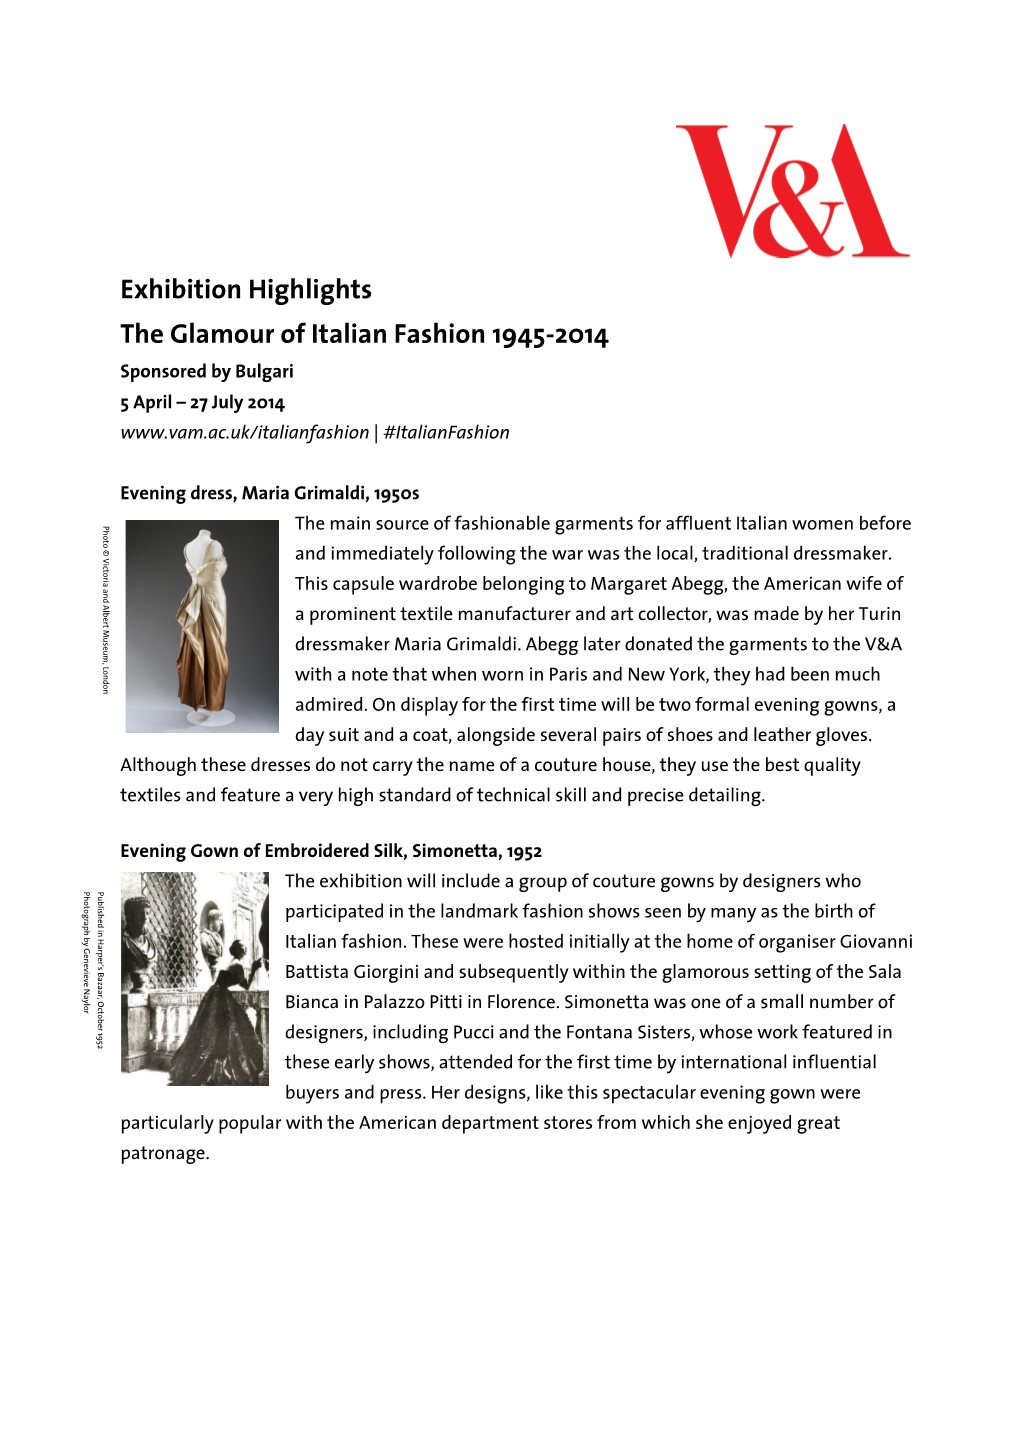 Exhibition Highlights the Glamour of Italian Fashion 1945-2014 Sponsored by Bulgari 5 April – 27 July 2014 | #Italianfashion